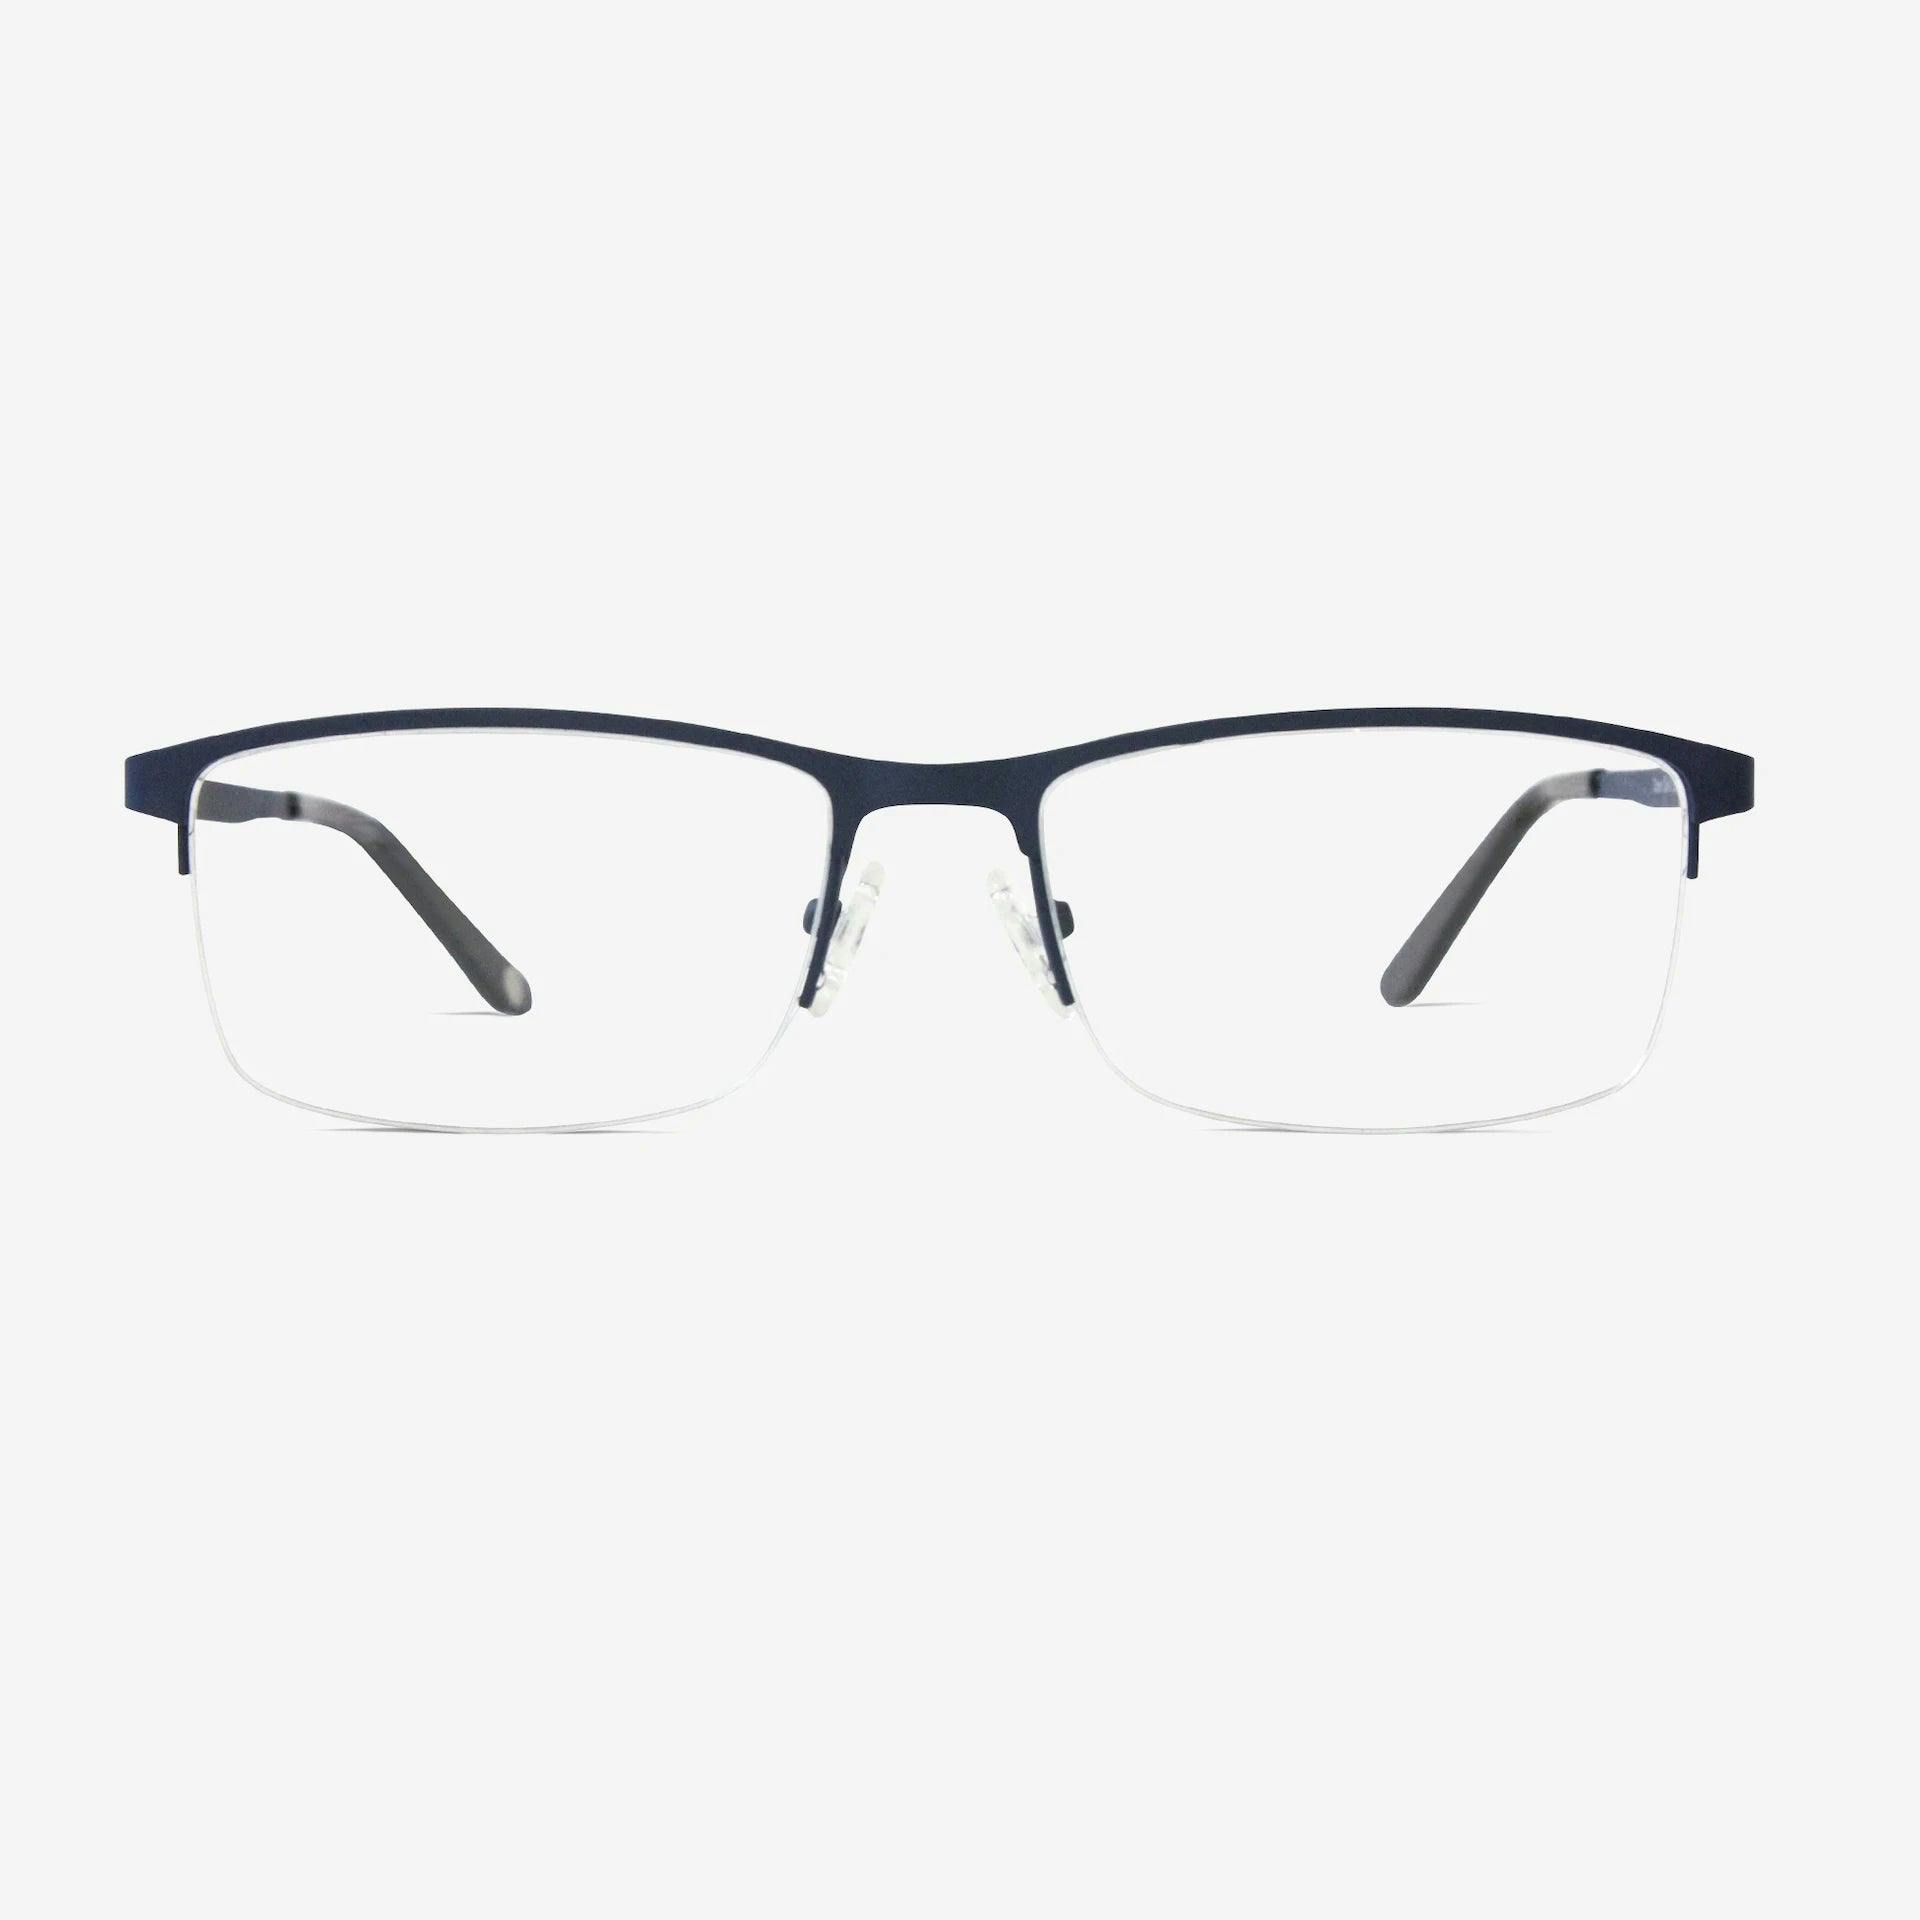 Huxley glasses | Croix Blue 